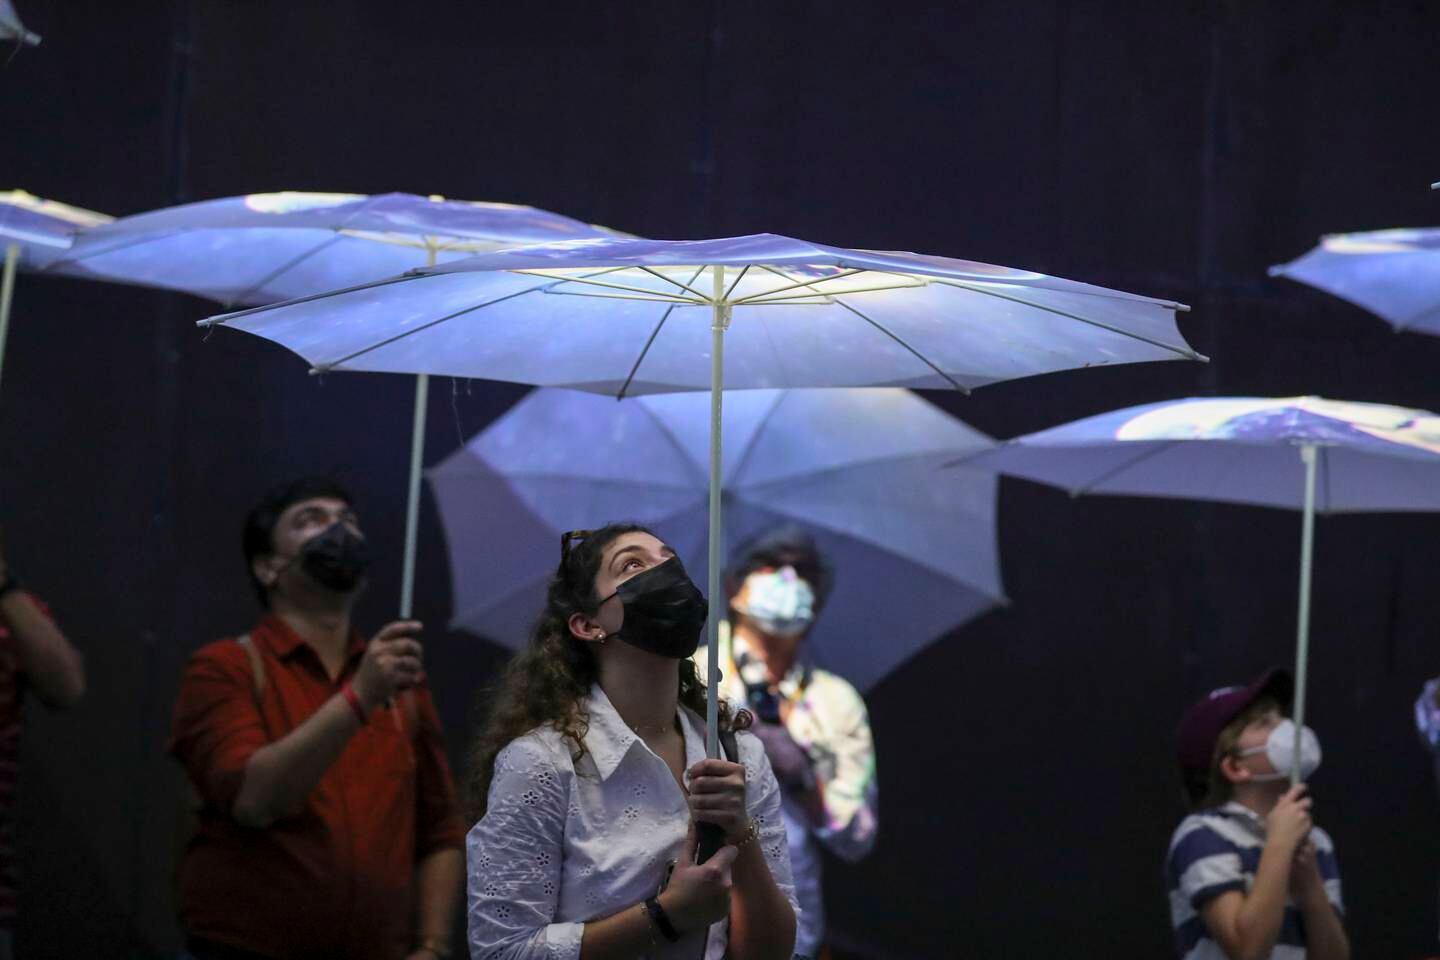 White umbrellas turn into projection screens at the Netherlands Pavilion. Khushnum Bhandari / The National
